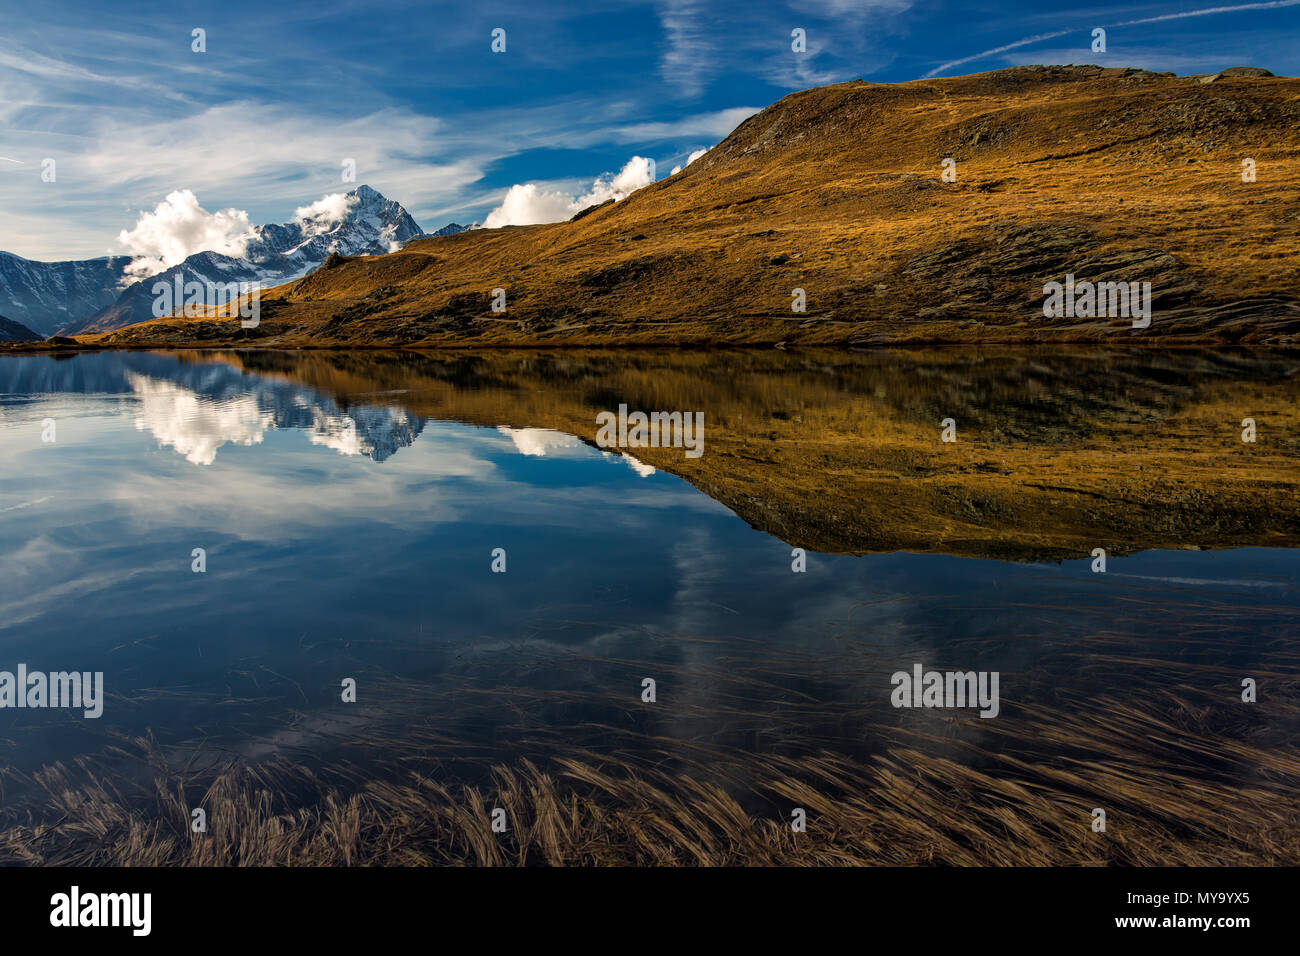 The Alpine region of Switzerland, Riffelsee. Stock Photo